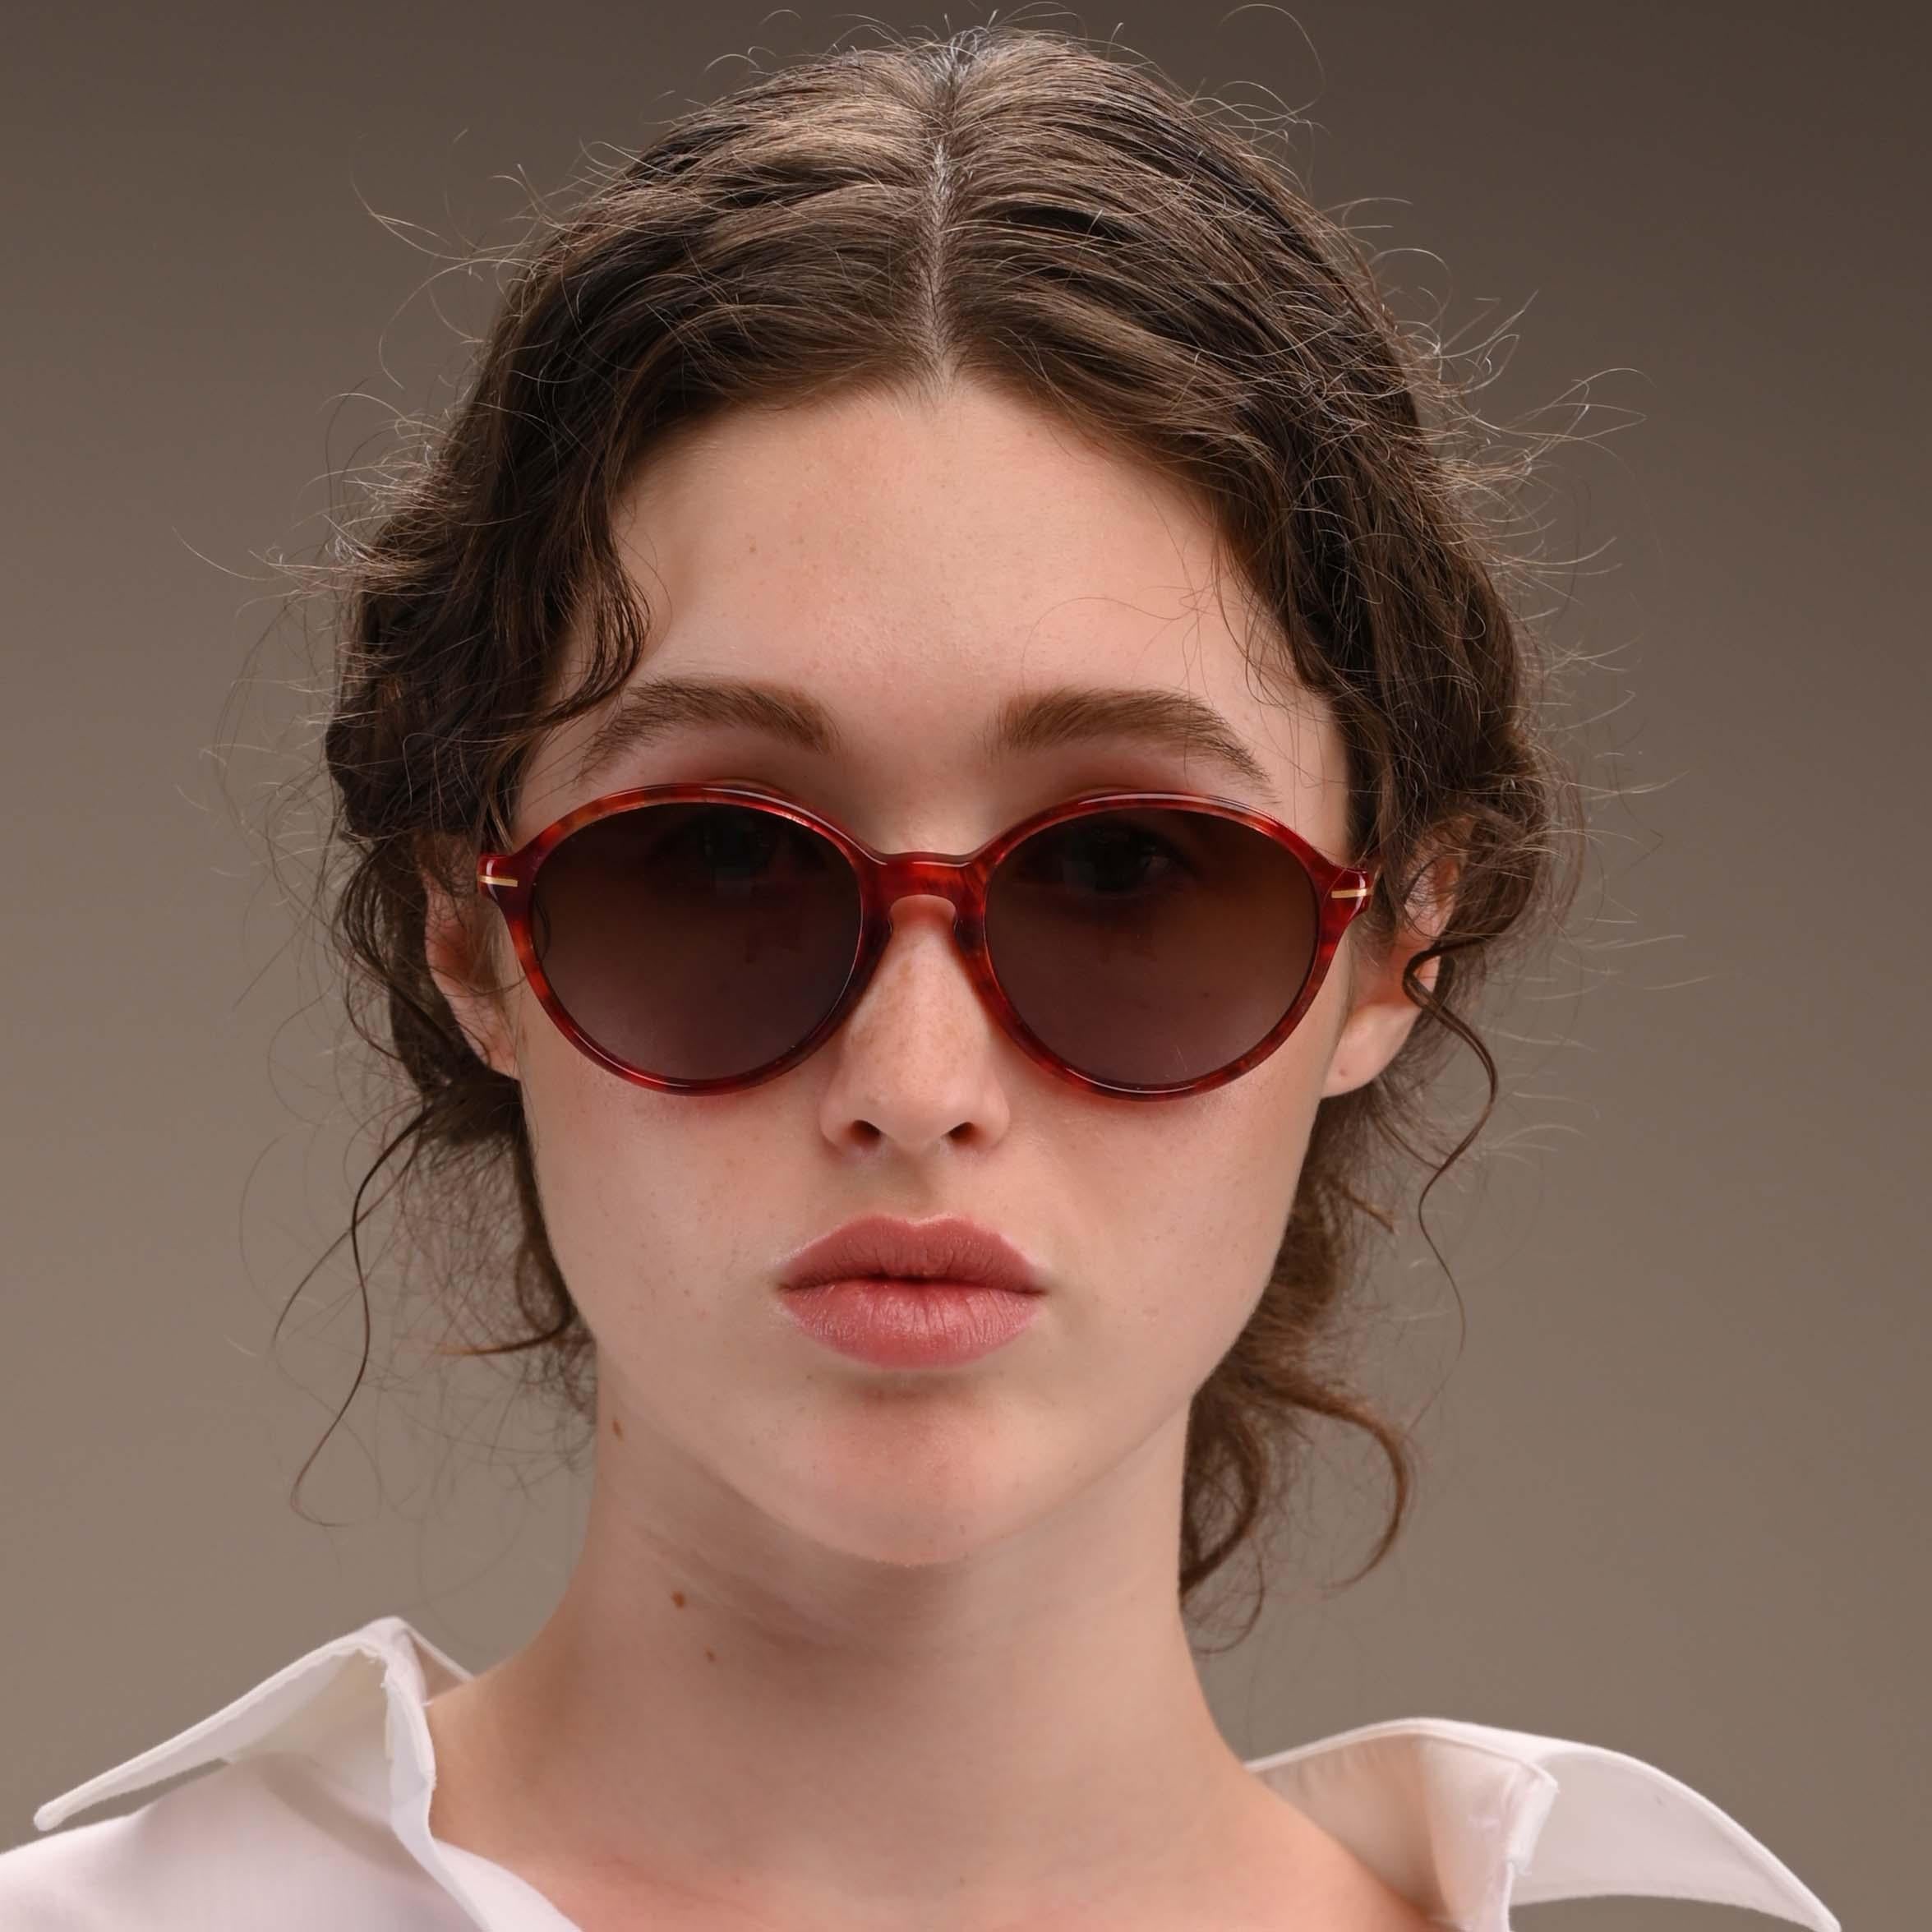 Gianni Versace vintage sunglasses 80s In New Condition For Sale In Santa Clarita, CA